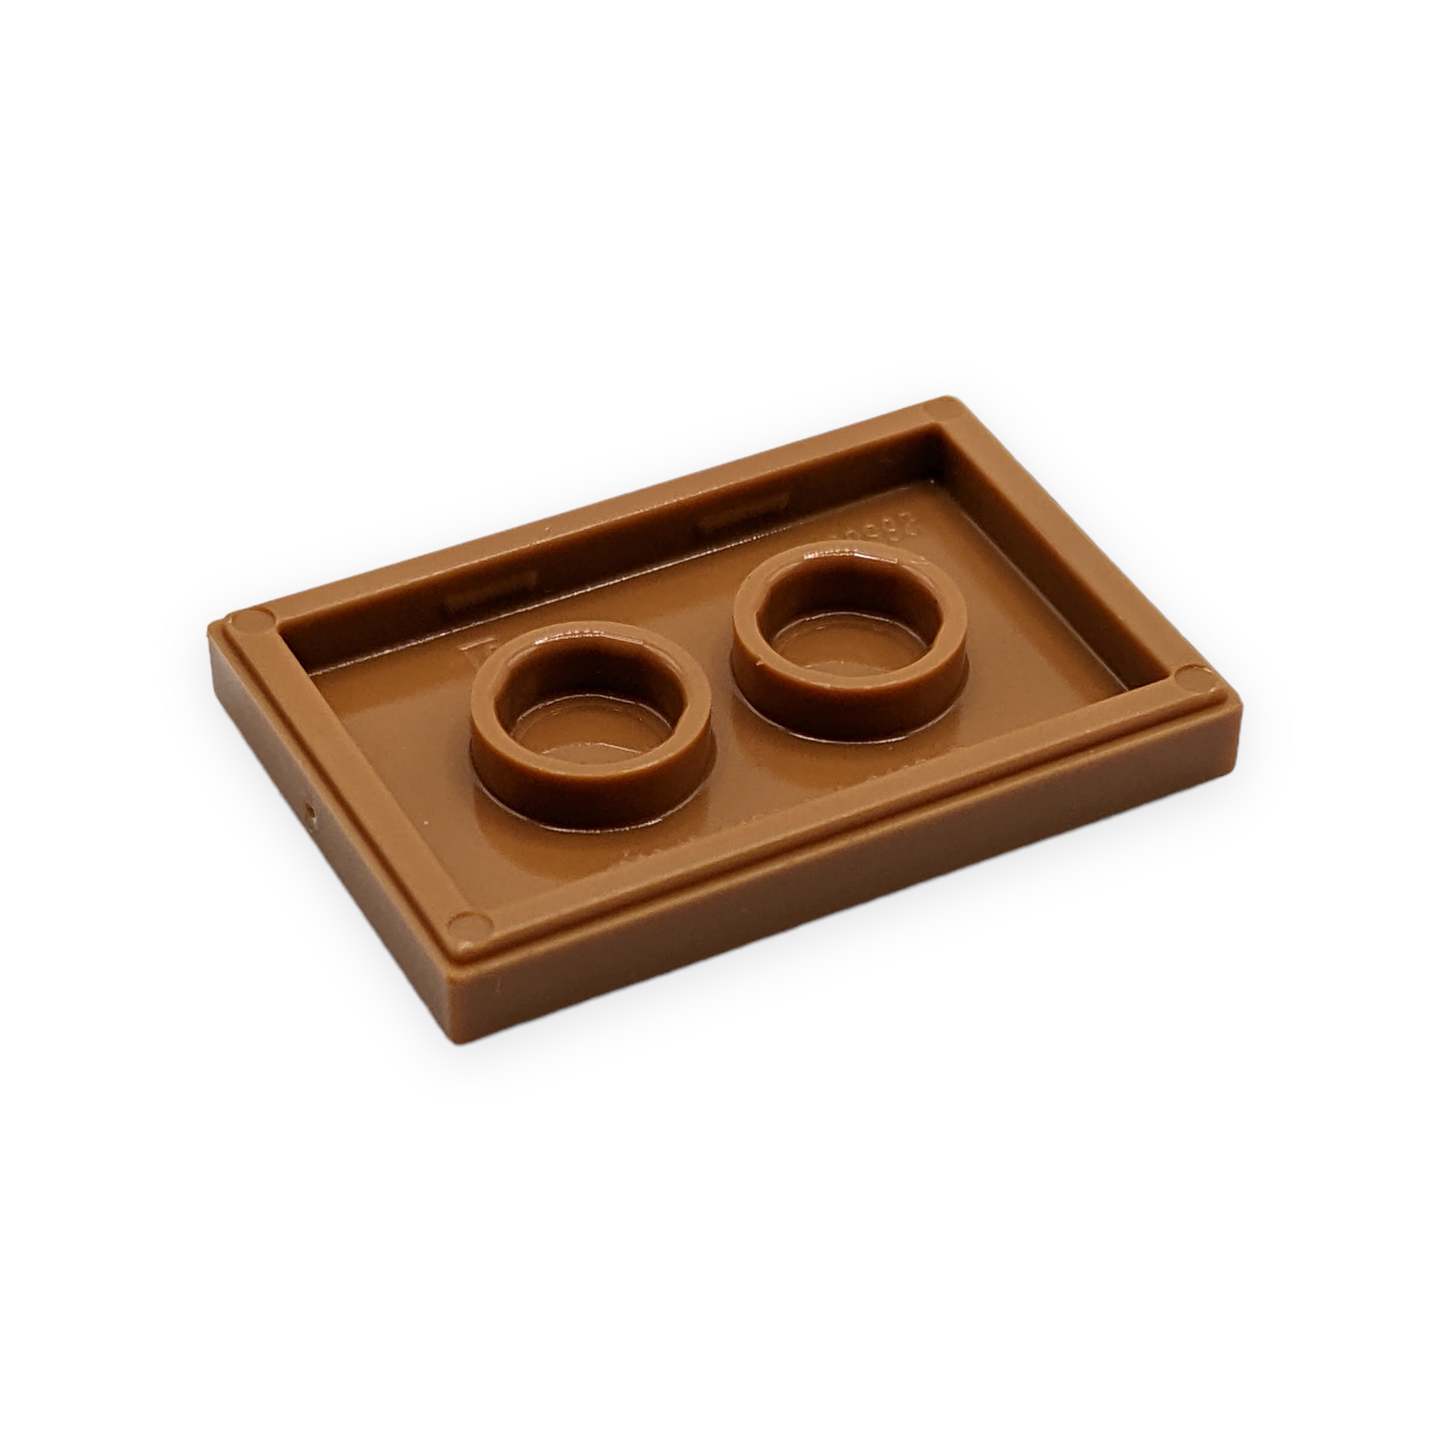 LEGO Tile 2x3 - Roter Pfeil auf Holz